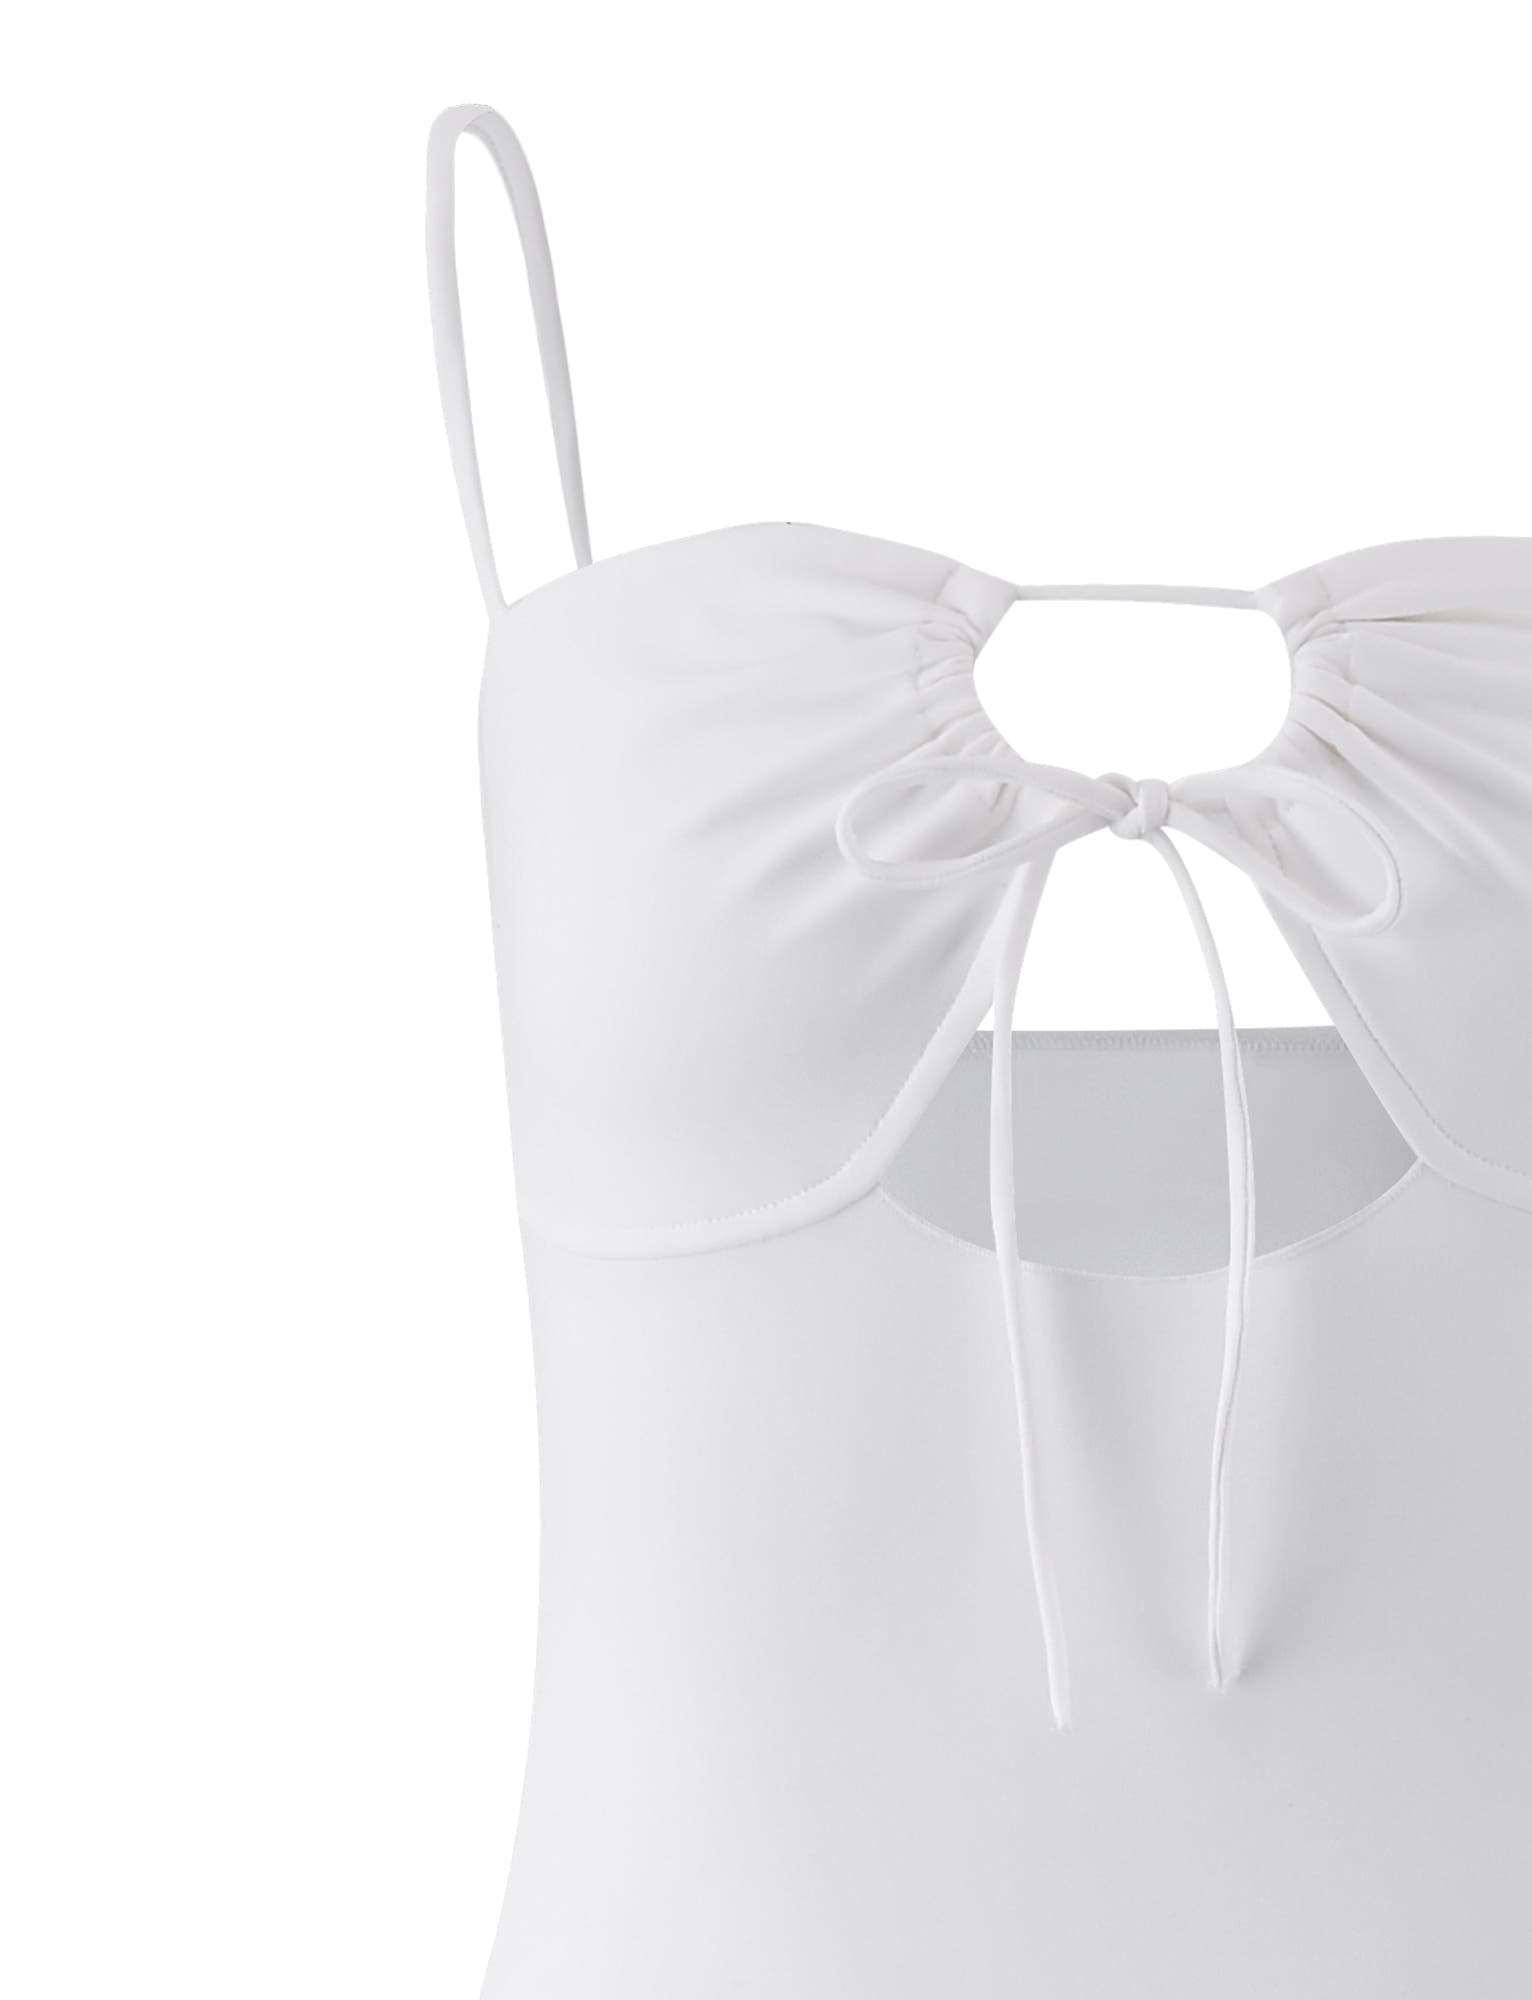 CORRINE DRESS - WHITE